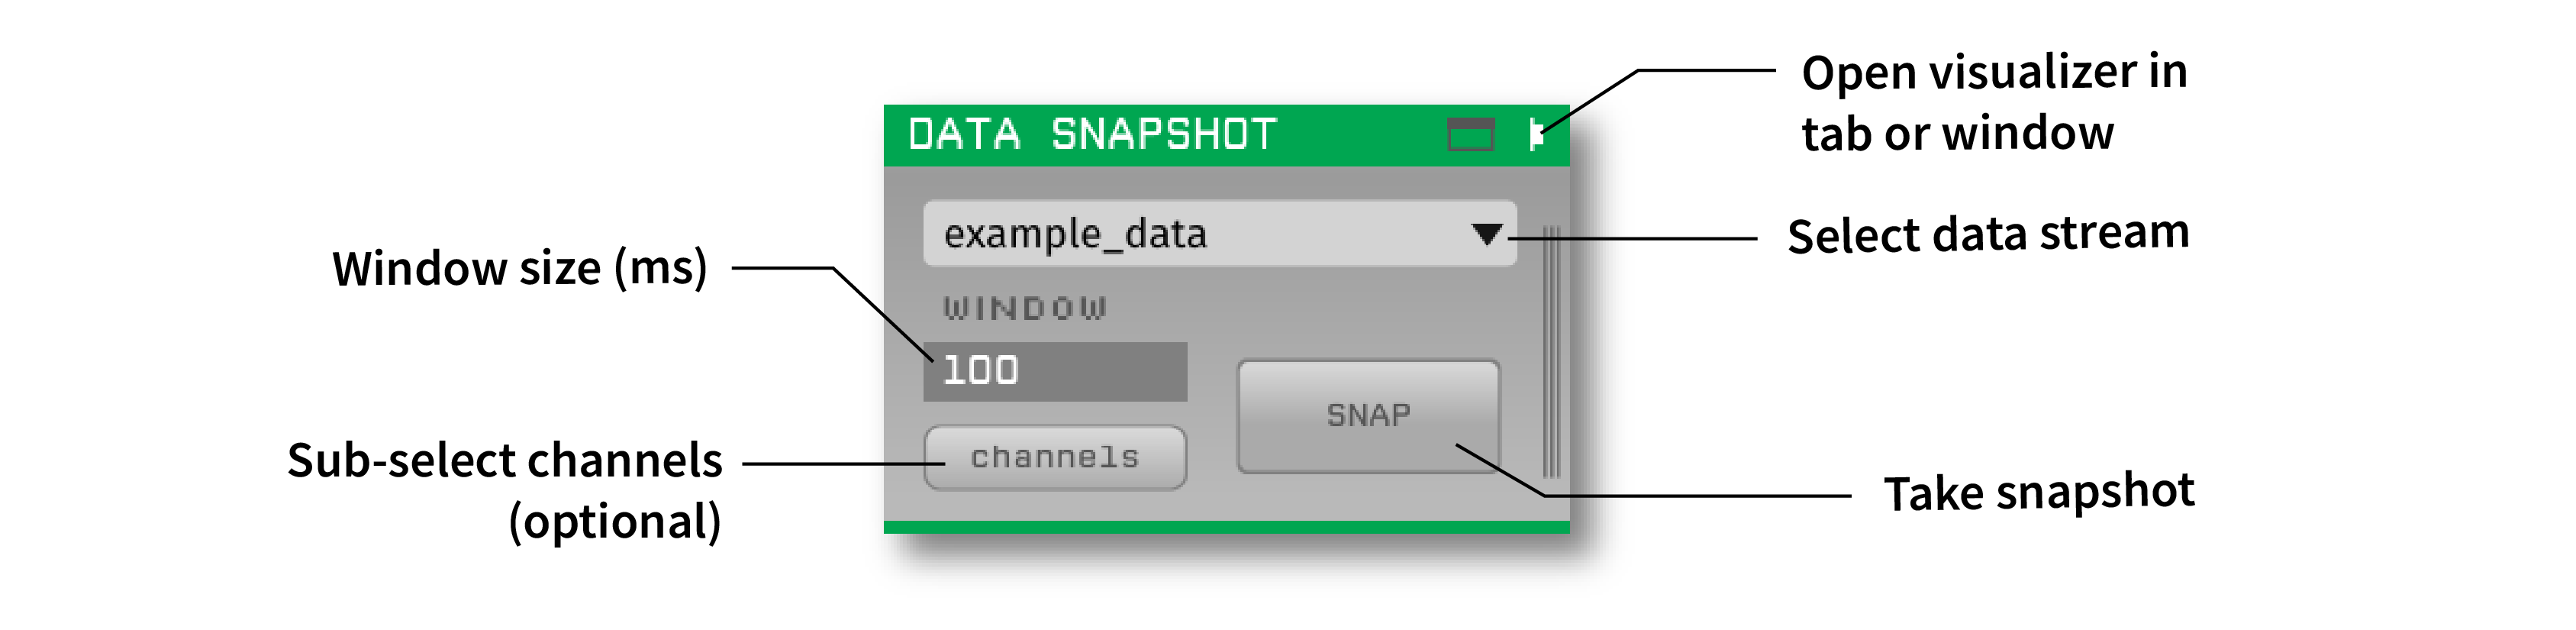 Annotated Data Snapshot settings interface